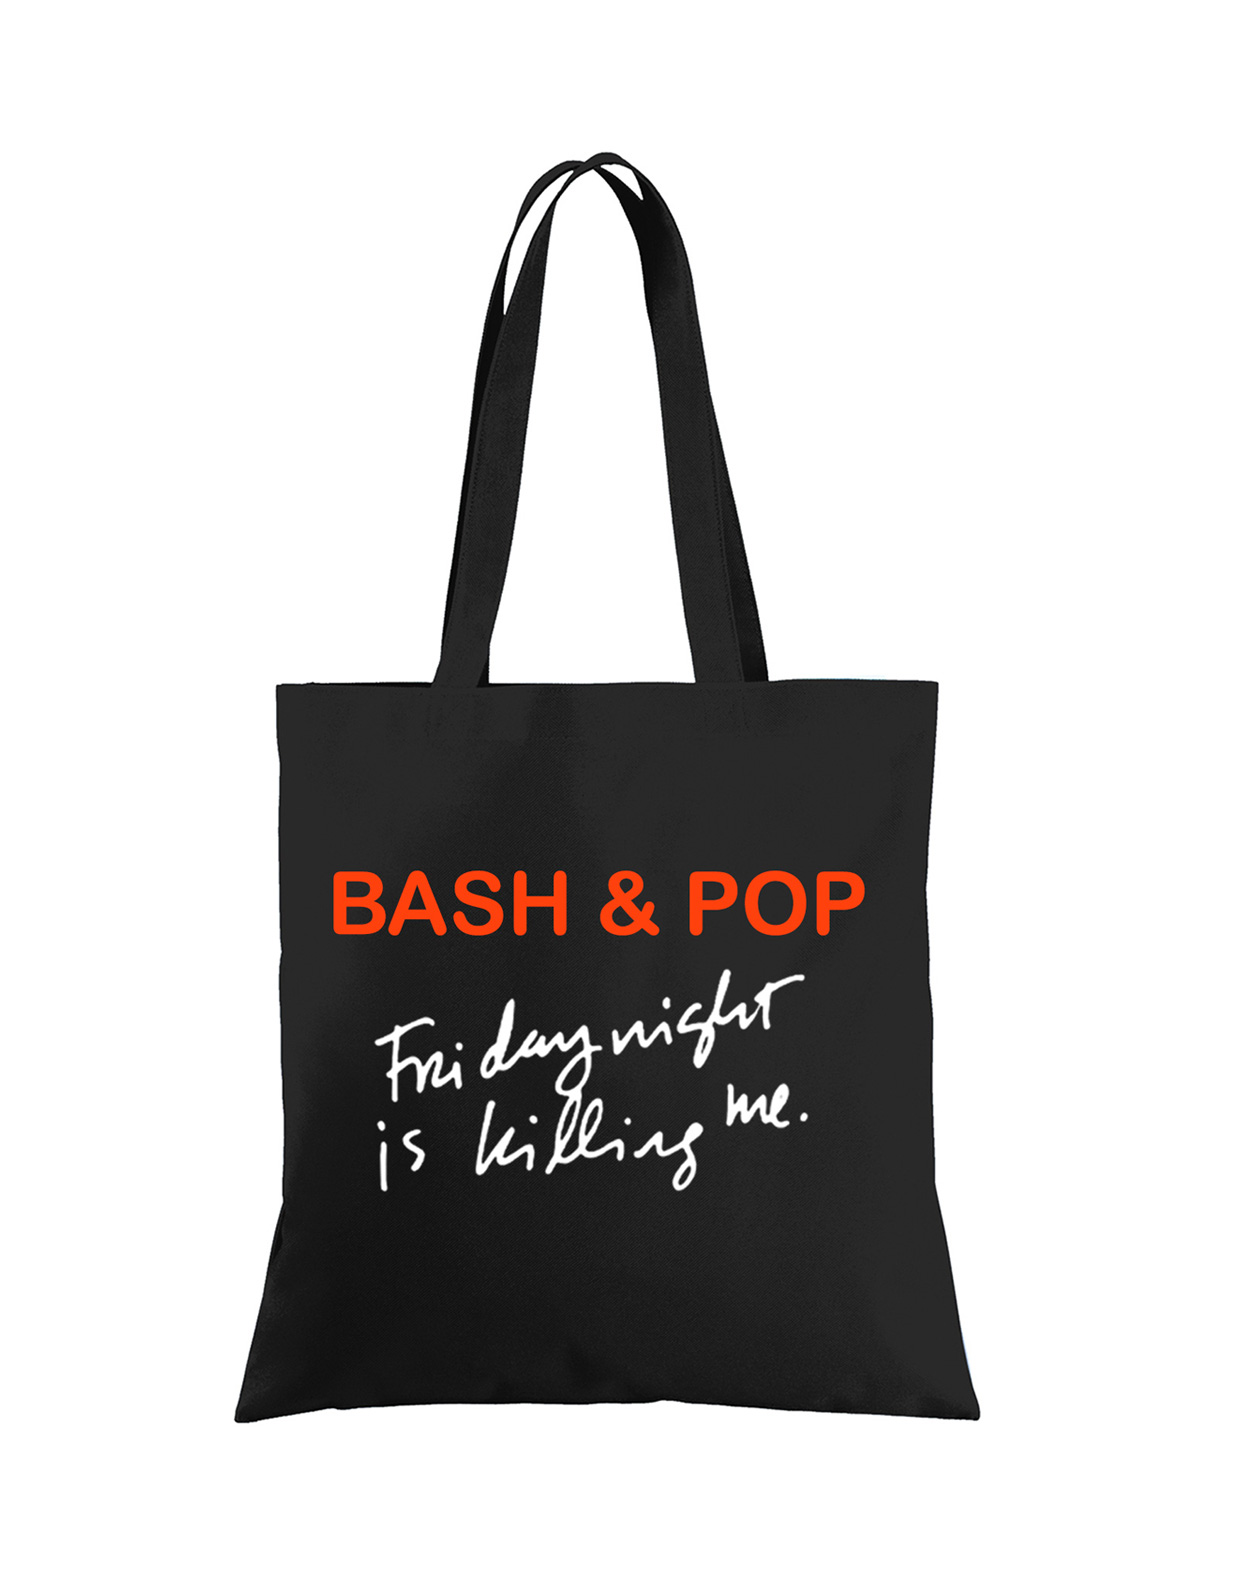 Bash & Pop Tote Bag - Tommy Stinson